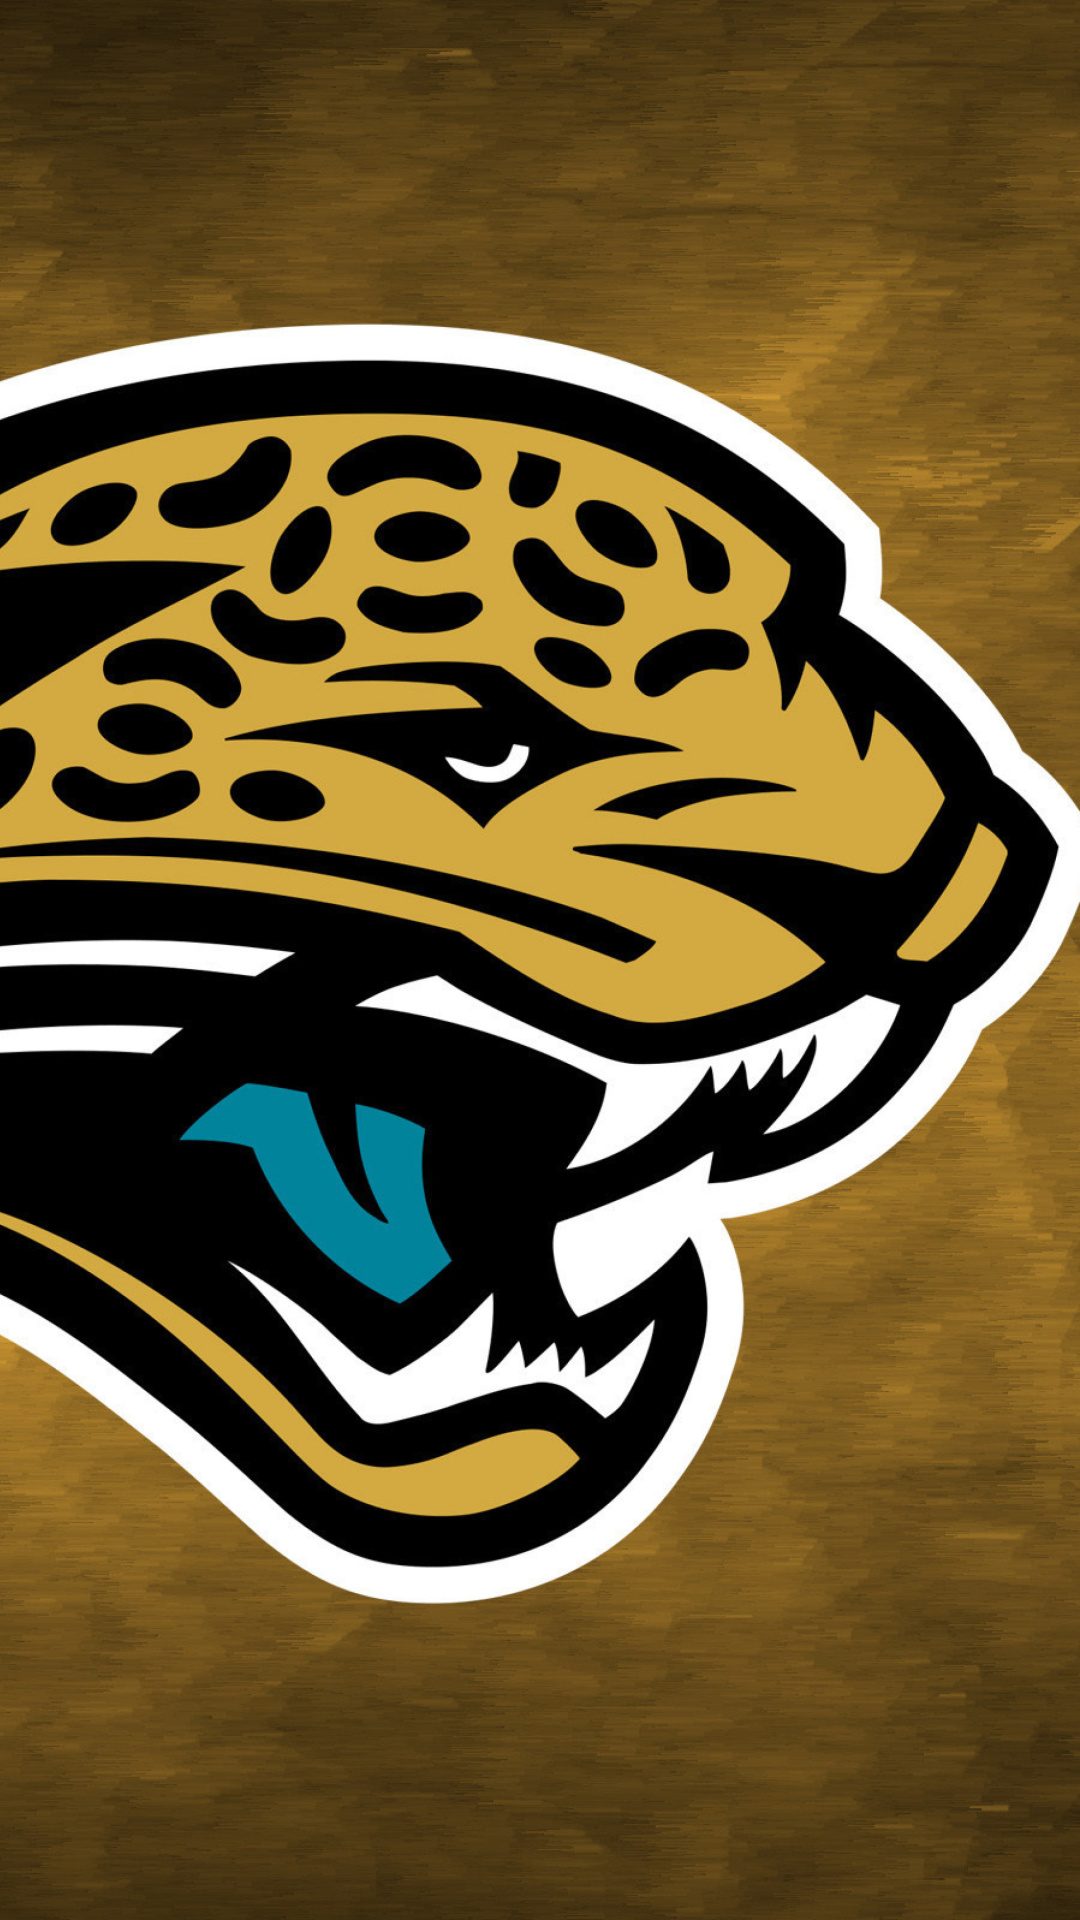 Jacksonville Jaguars NFL wallpaper 1080x1920